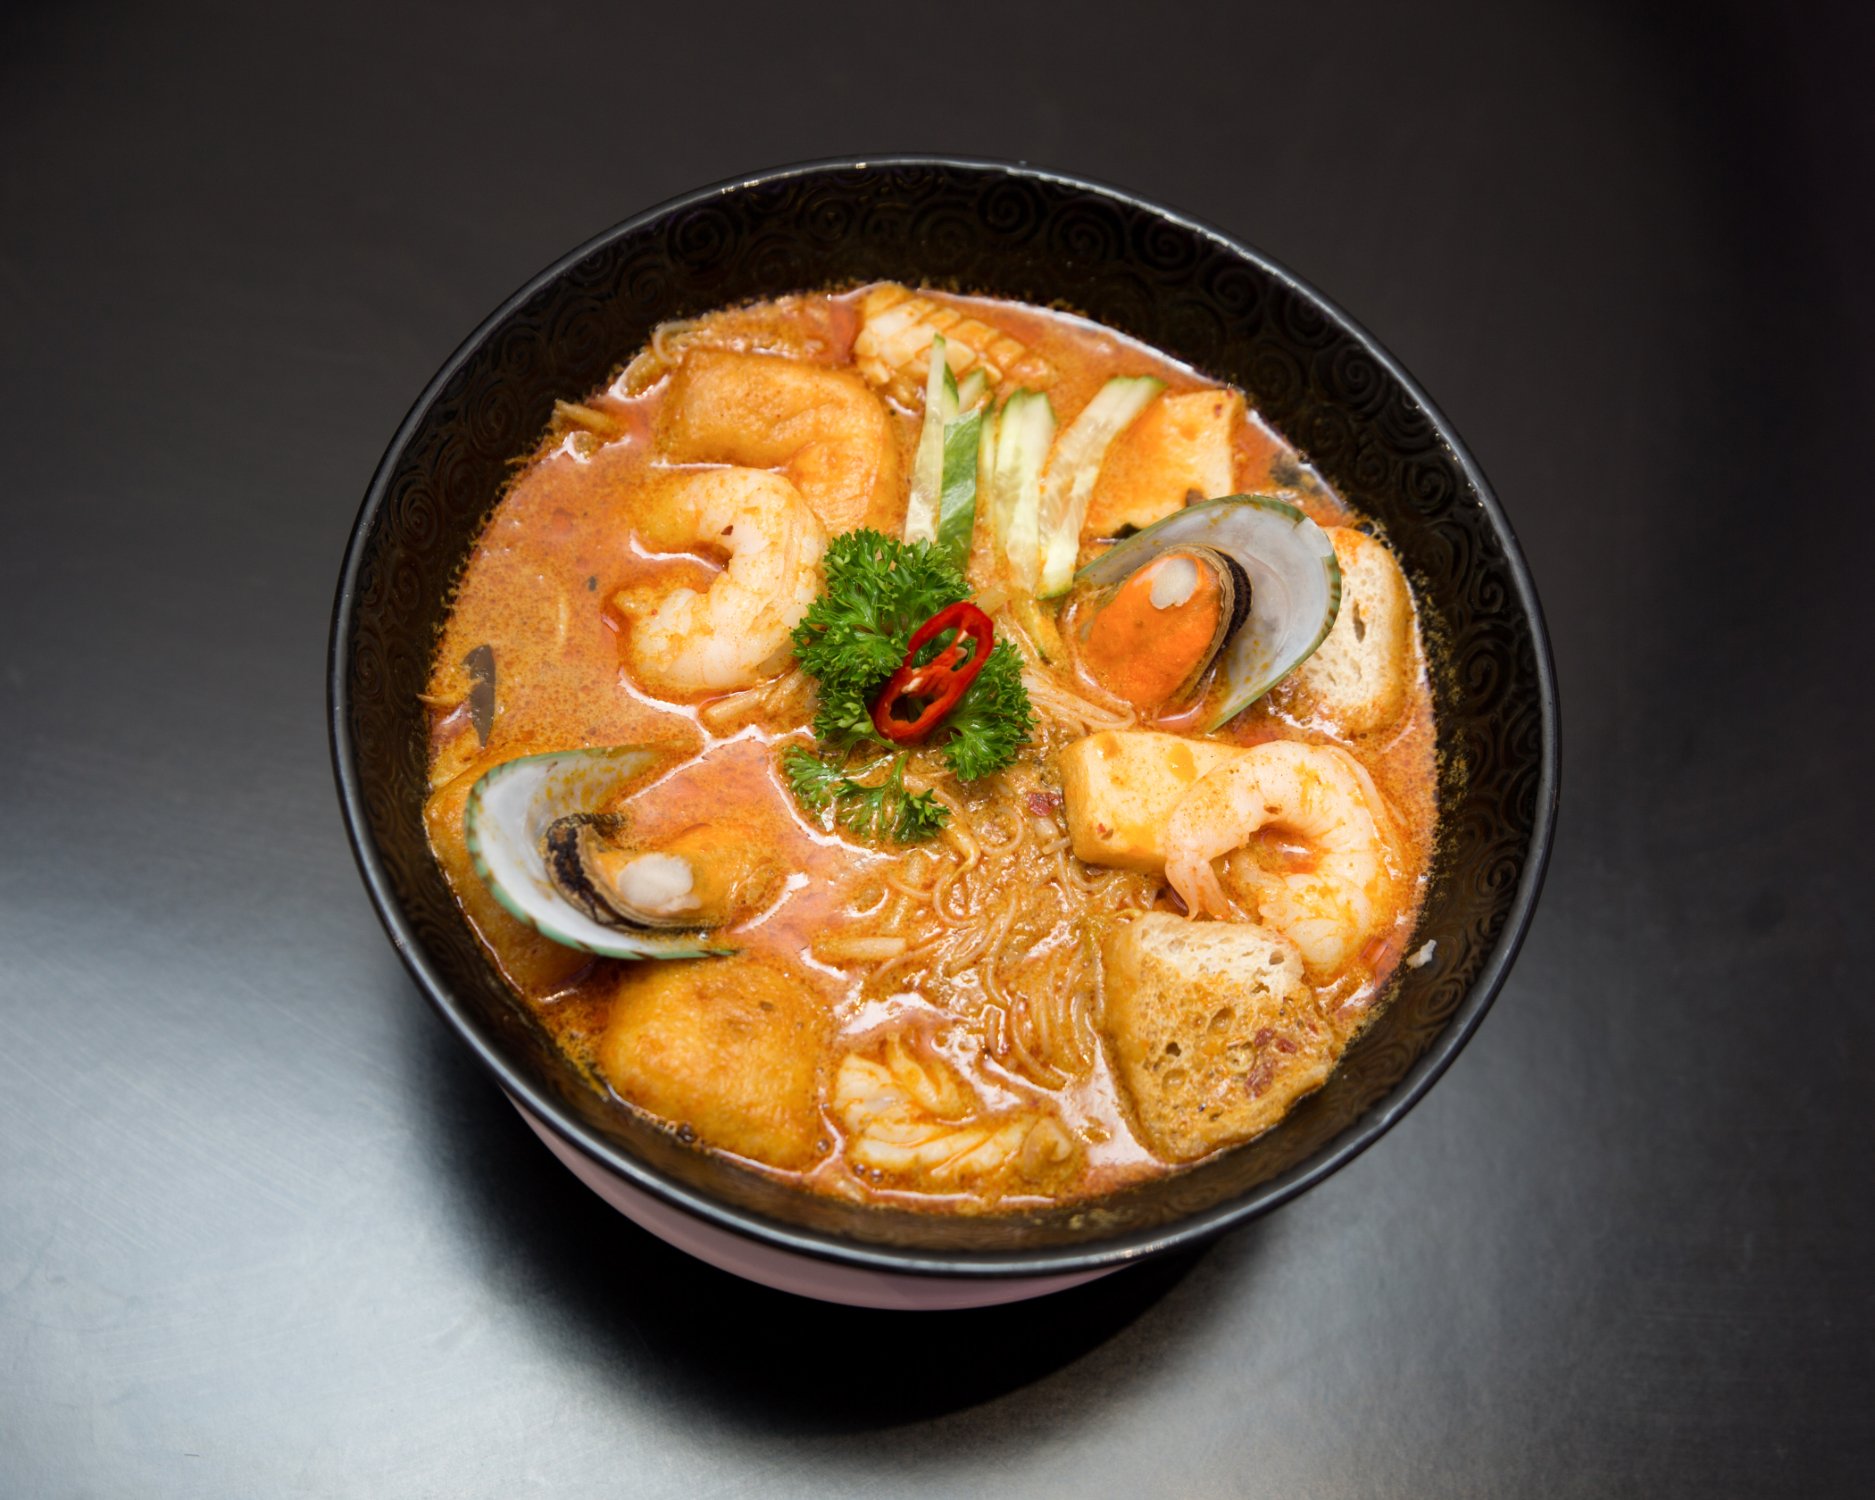 JOY KITCHEN Southeast Asian Cuisine